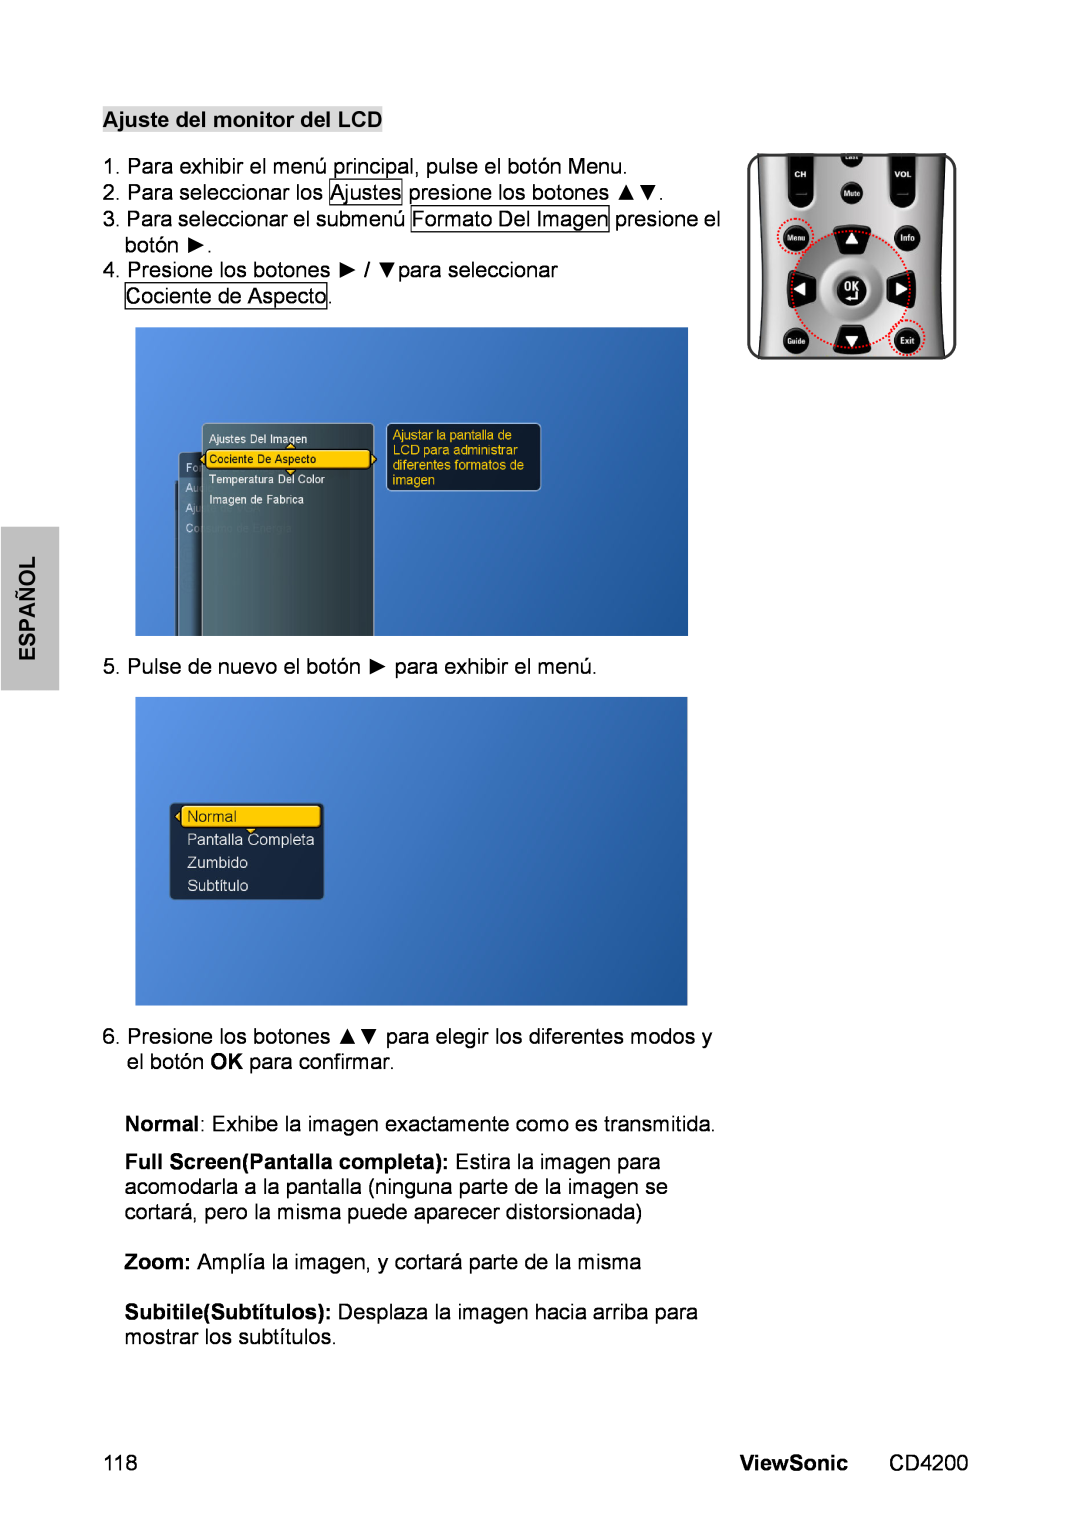 ViewSonic CD4200 manual Ajuste del monitor del LCD, Español, ViewSonic 